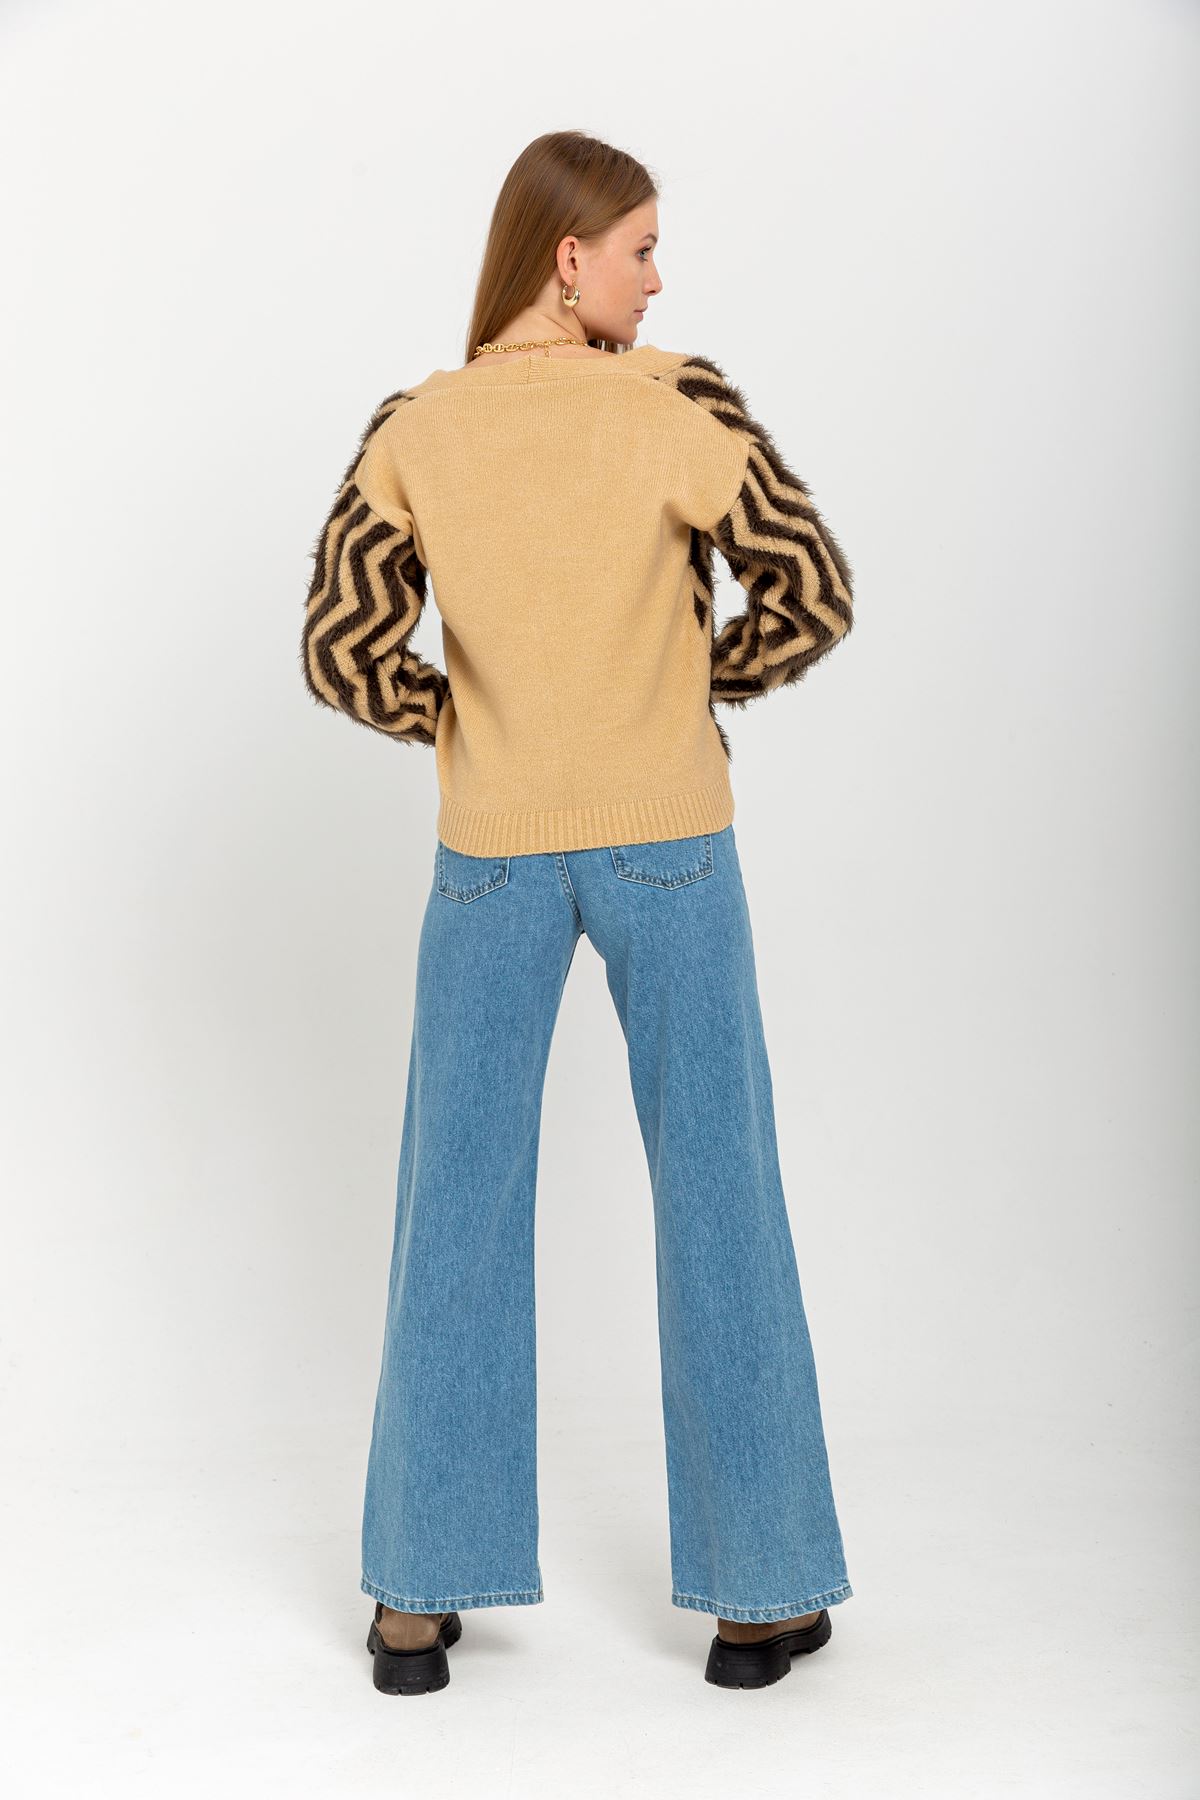 Knitwear Fabric Long Sleeve V-Neck Short Fringed Women Cardigan - Beige 